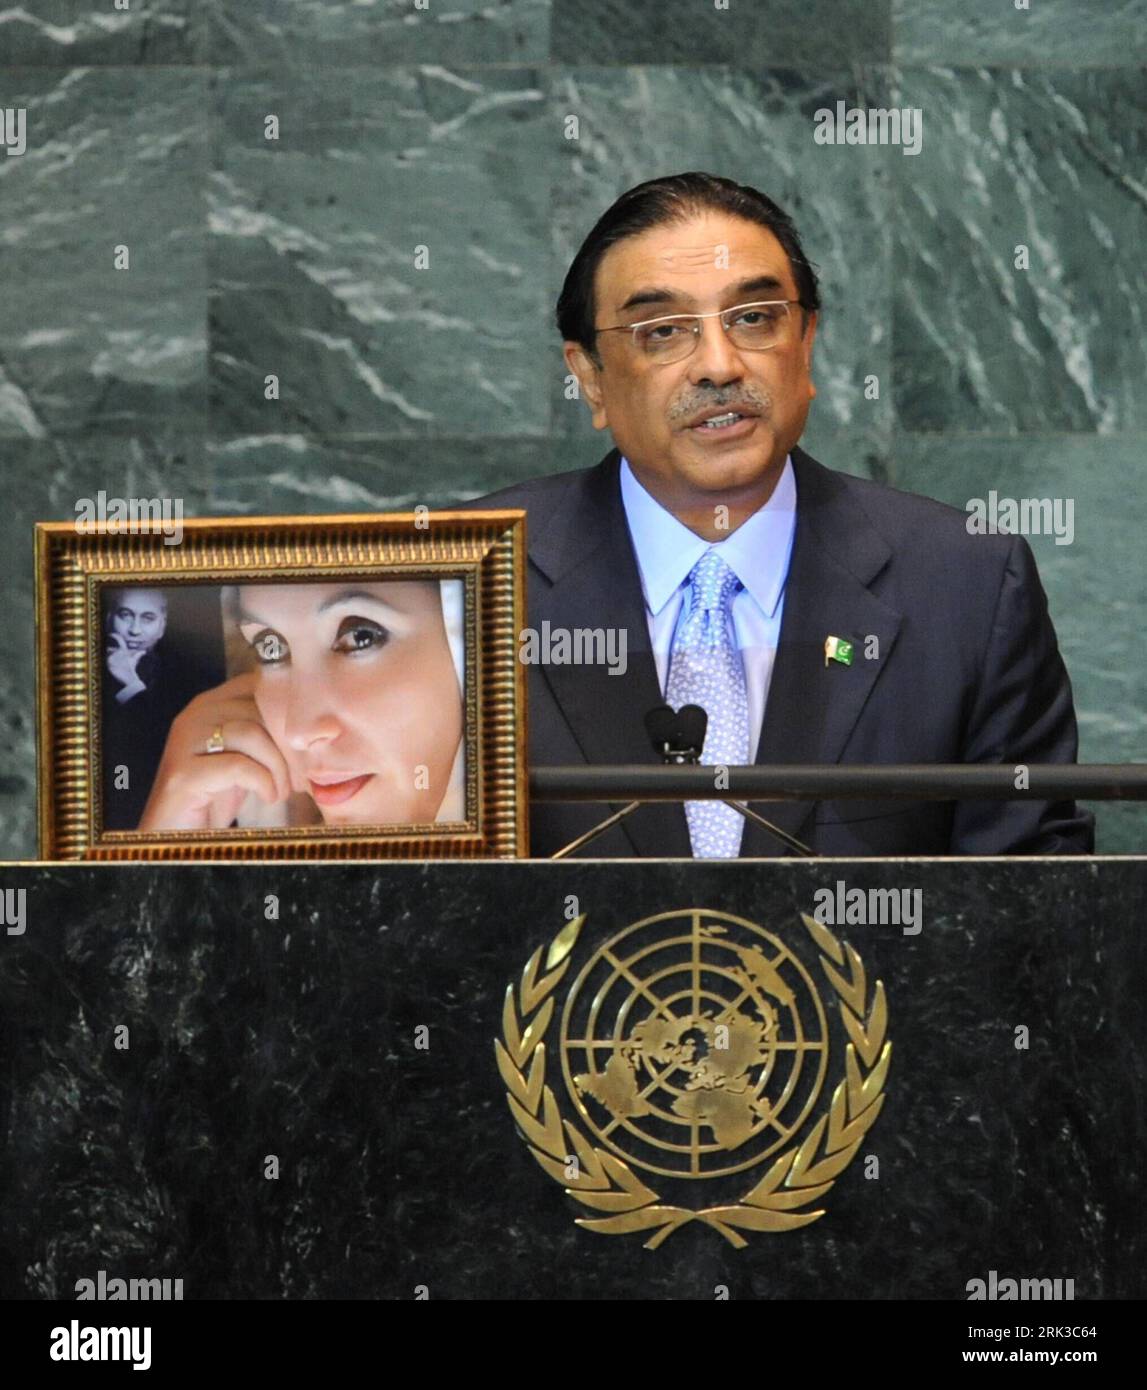 Bildnummer: 53431859  Datum: 25.09.2009  Copyright: imago/Xinhua (090925) -- NEW YORK, Sept. 25, 2009 (Xinhua) -- Pakistani President Asif Ali Zardari speaks next to a of his late wife, slained politician Benazir Bhutto and her slained father Zulfikar Ali Bhutto, during his address to the UN General Assembly at the United Nations headquarters in New York Sept. 25, 2009. (Xinhua/Shen Hong) (1)US-NEW YORK-UN GA DEBATE-ZARDARI PUBLICATIONxNOTxINxCHN People Politik UN Vollversammlung Generalversammlung UNO Vereinte Nationen Porträt kbdig xng 2009 quadrat premiumd  o0 Frau, Ehefrau, Familie, Foto Stock Photo